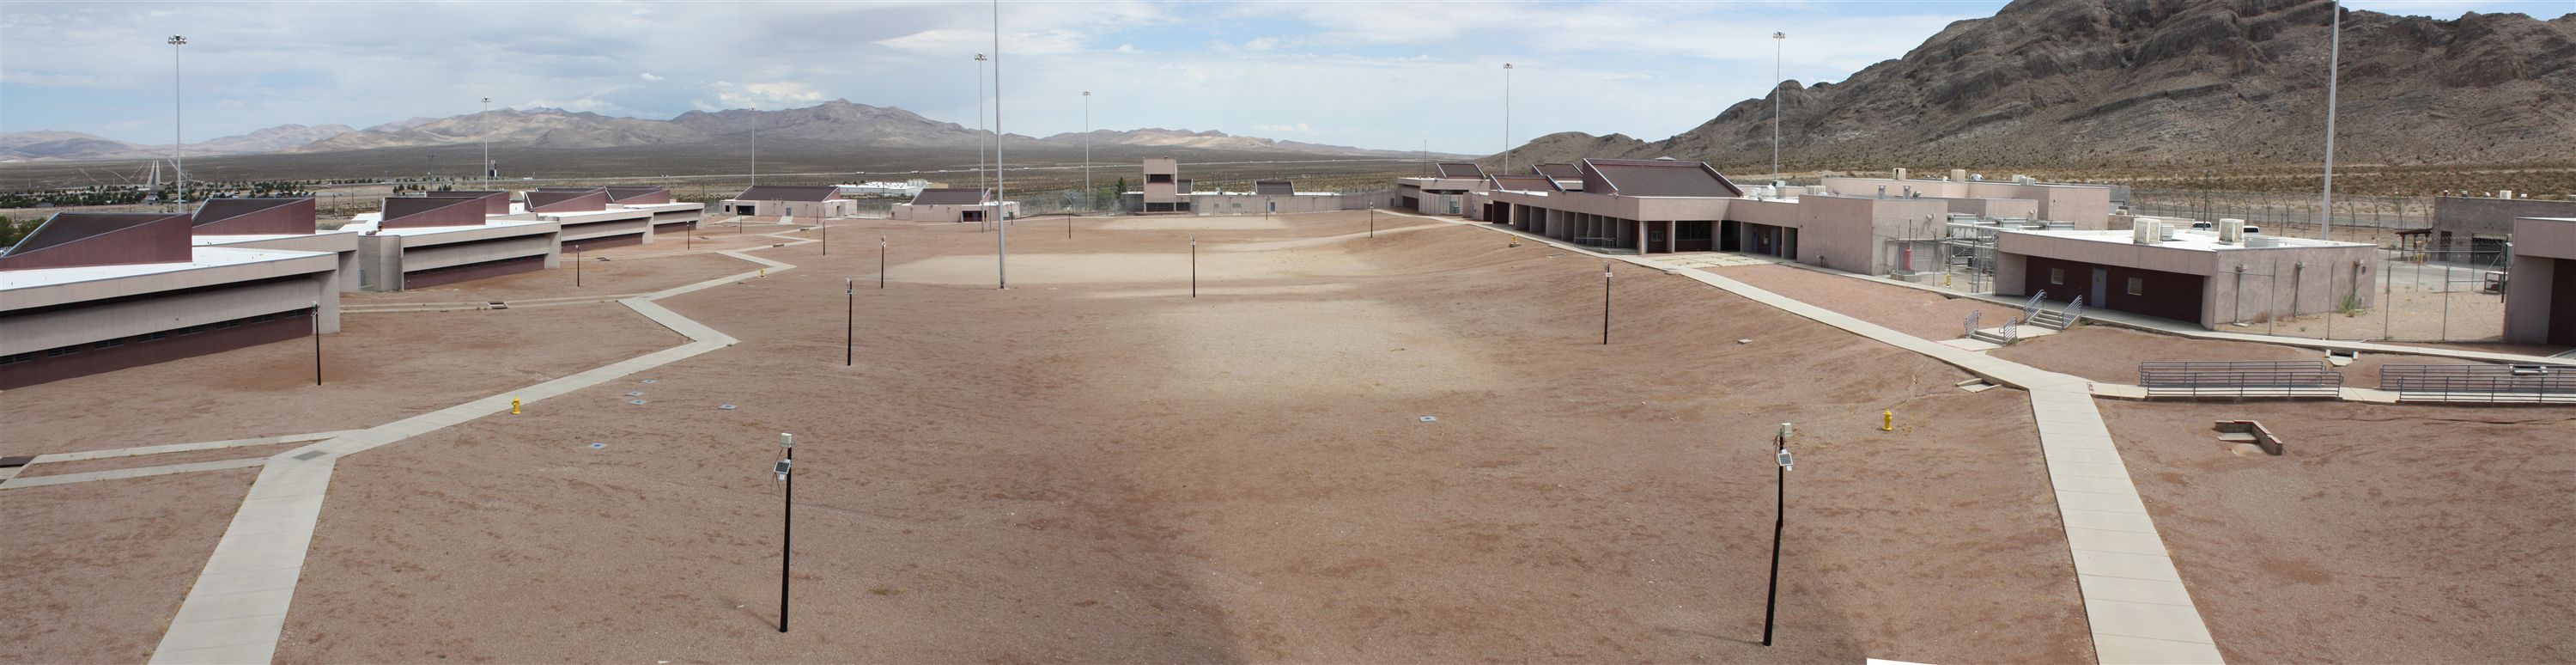 Southern Nevada Correctional Facility